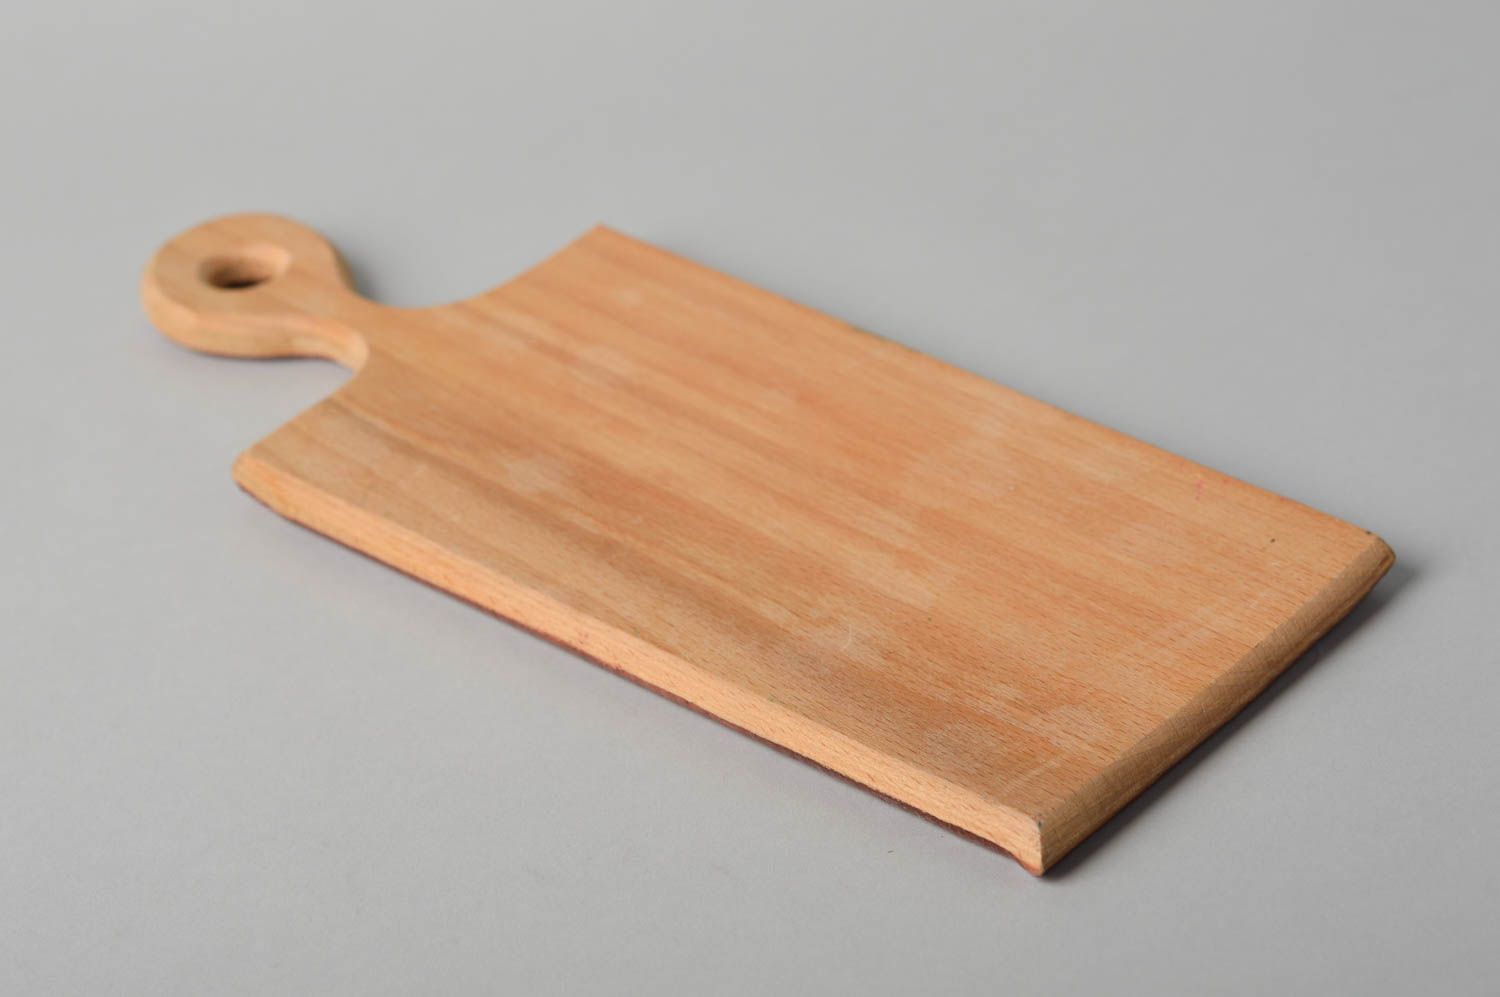 Handmade cutting board beautiful home acessories stylish kitchen utensils photo 3